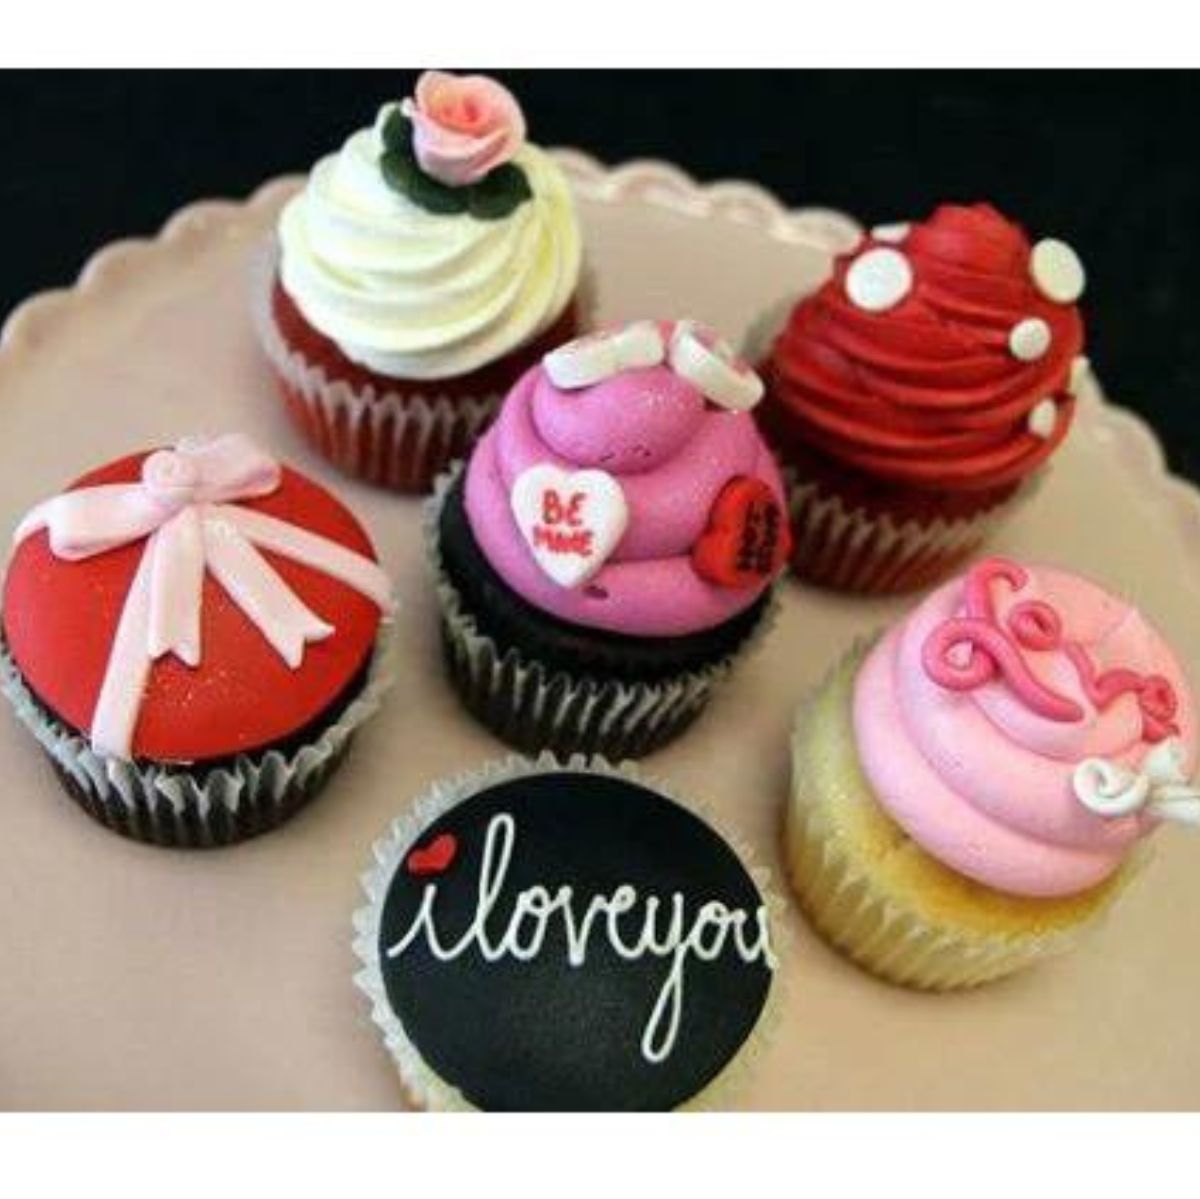 I Love You Cupcakes